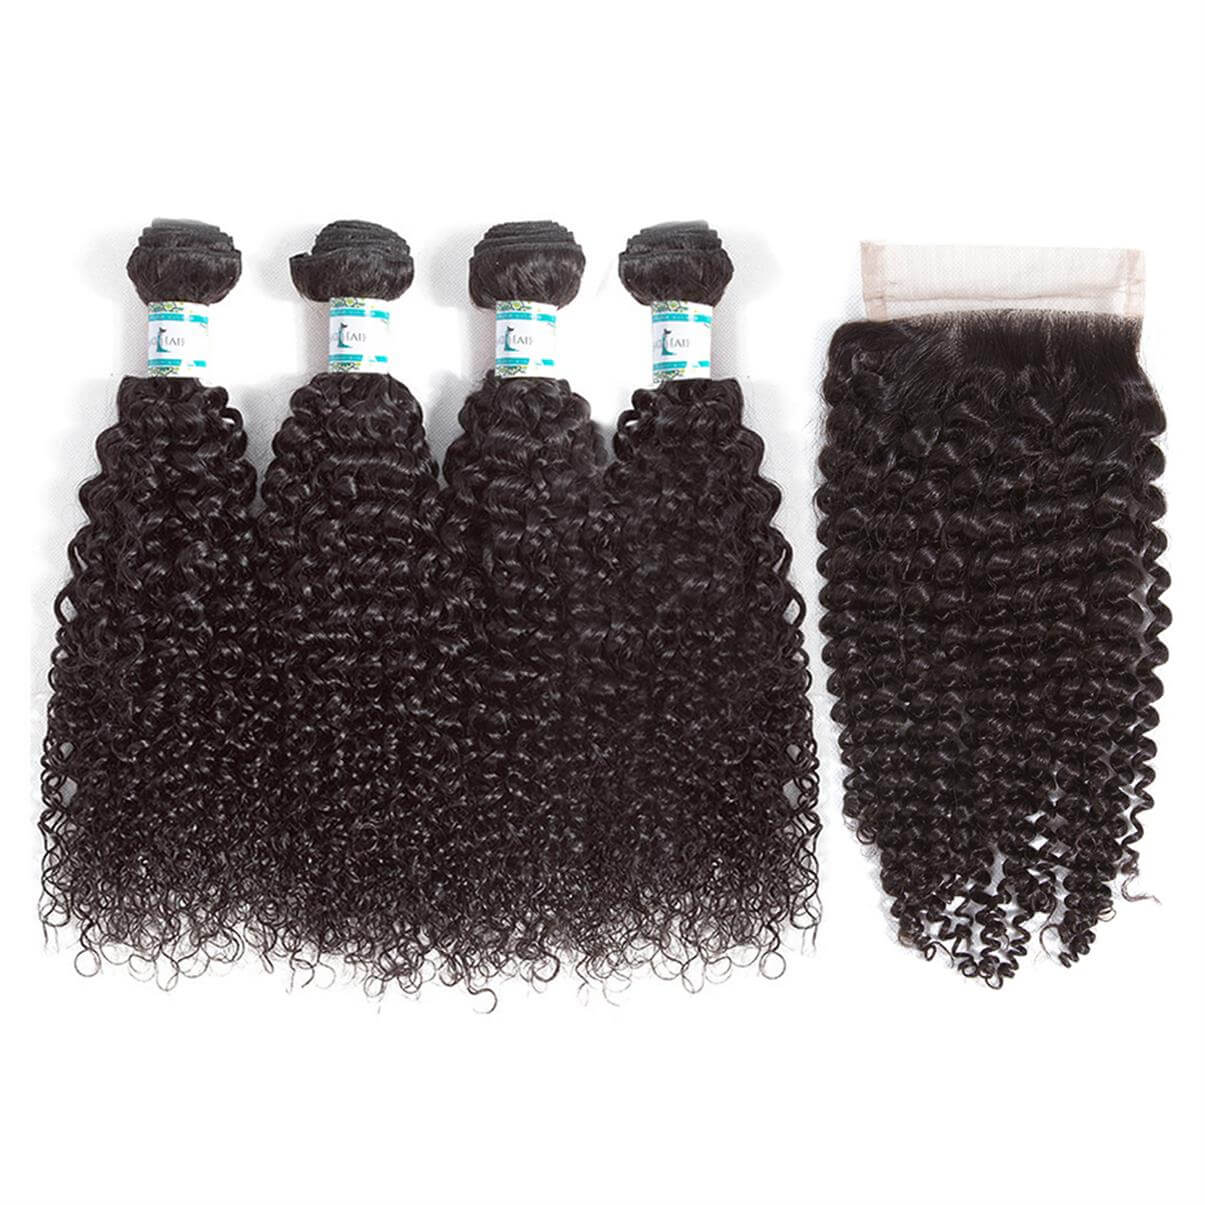 Lakihair 8A Brazilian Human Hair 4 Bundles Kinky Curly Hair Bundles With Lace Closure 4x4 